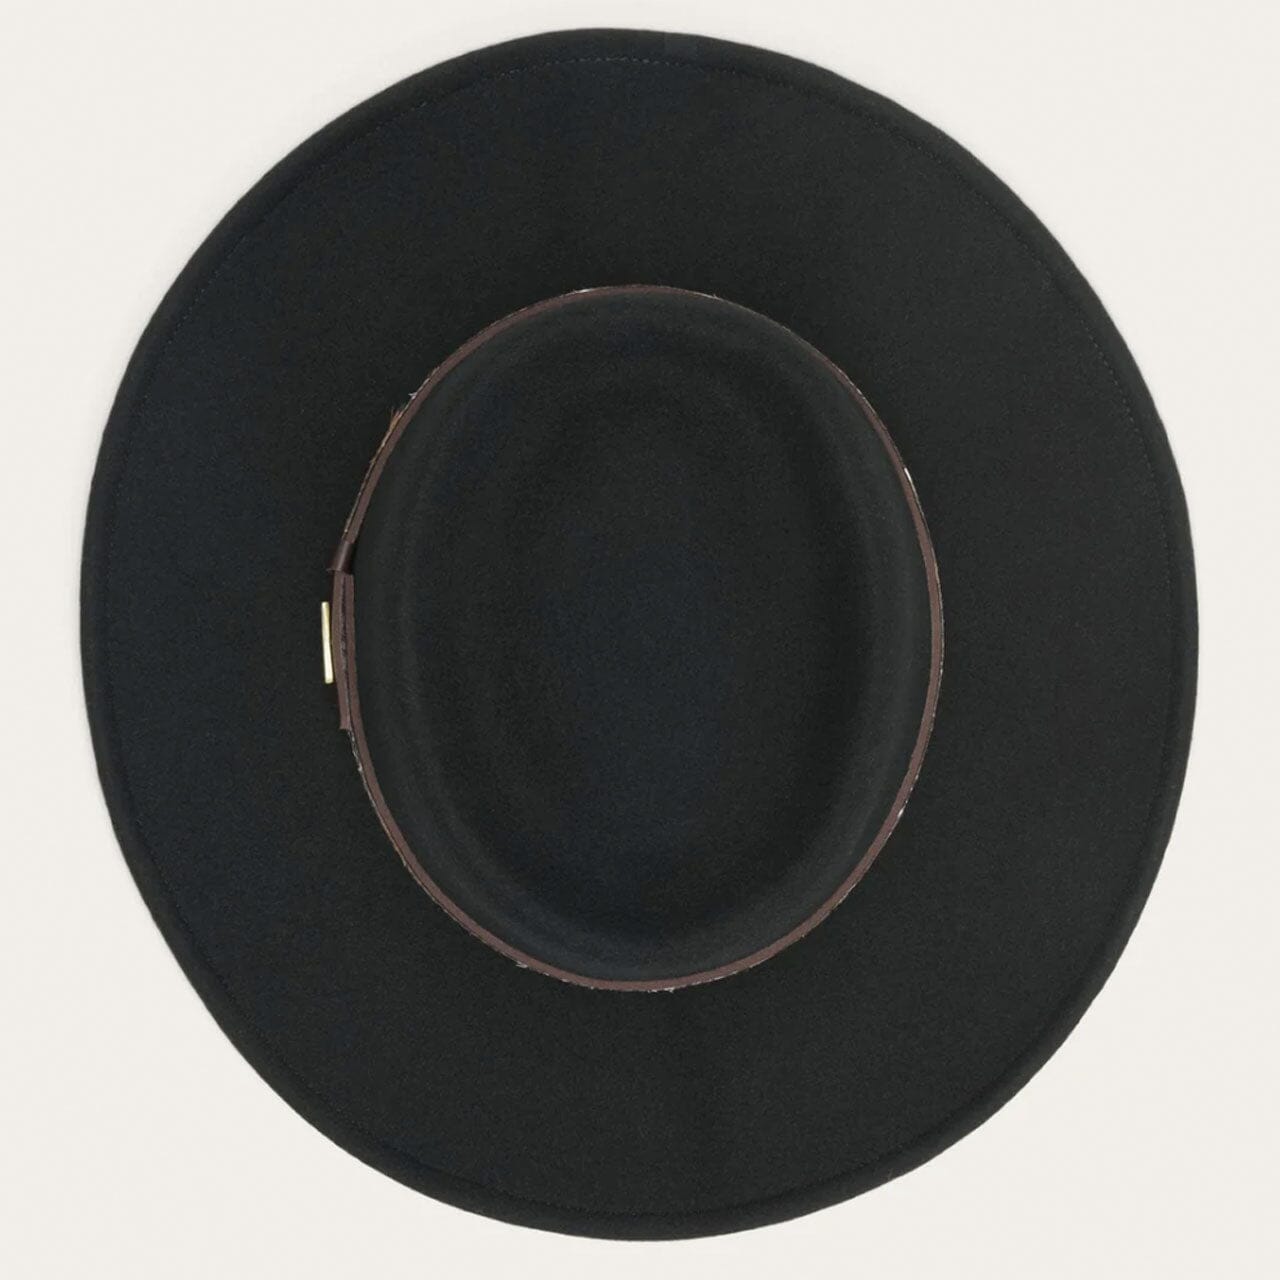 Kelso Black Hat - STKEL7